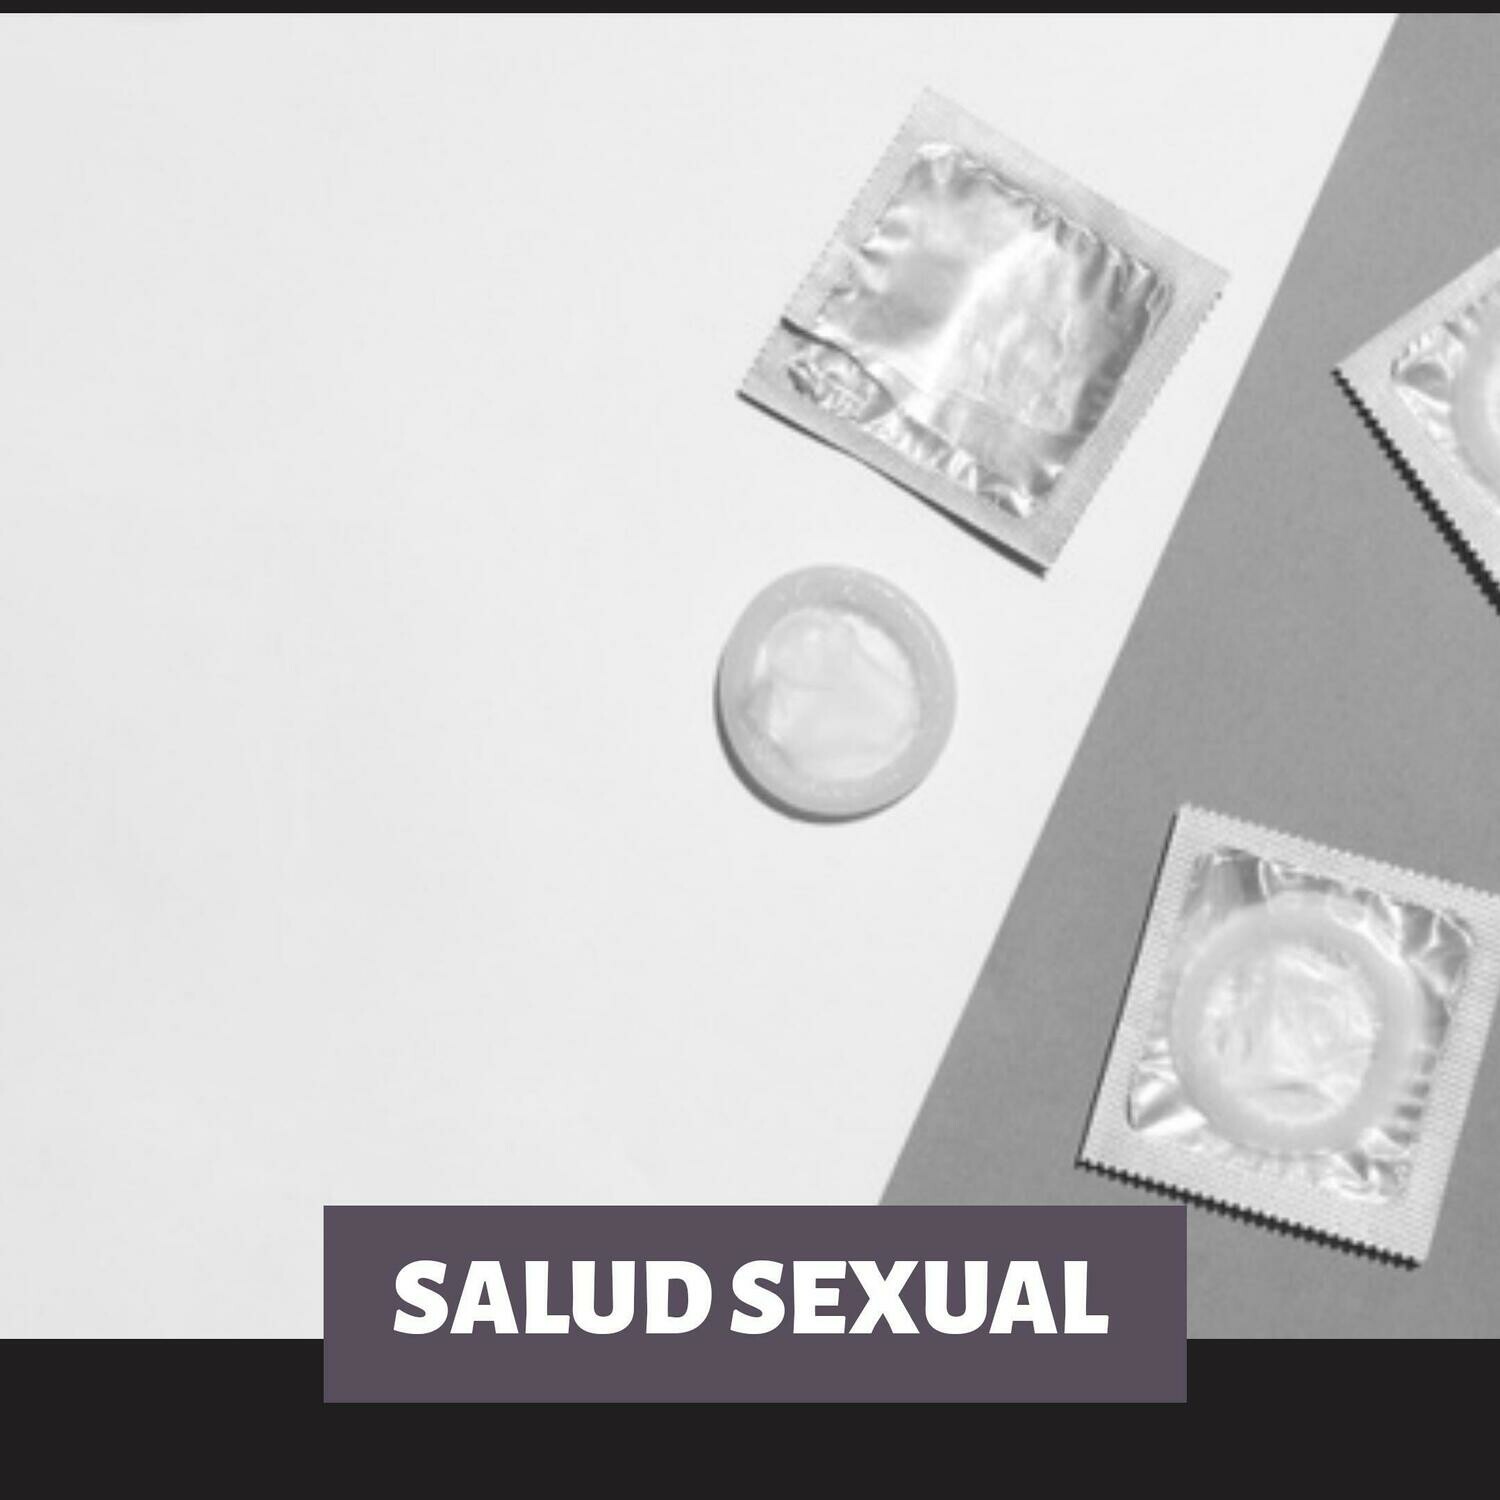 Salud sexual